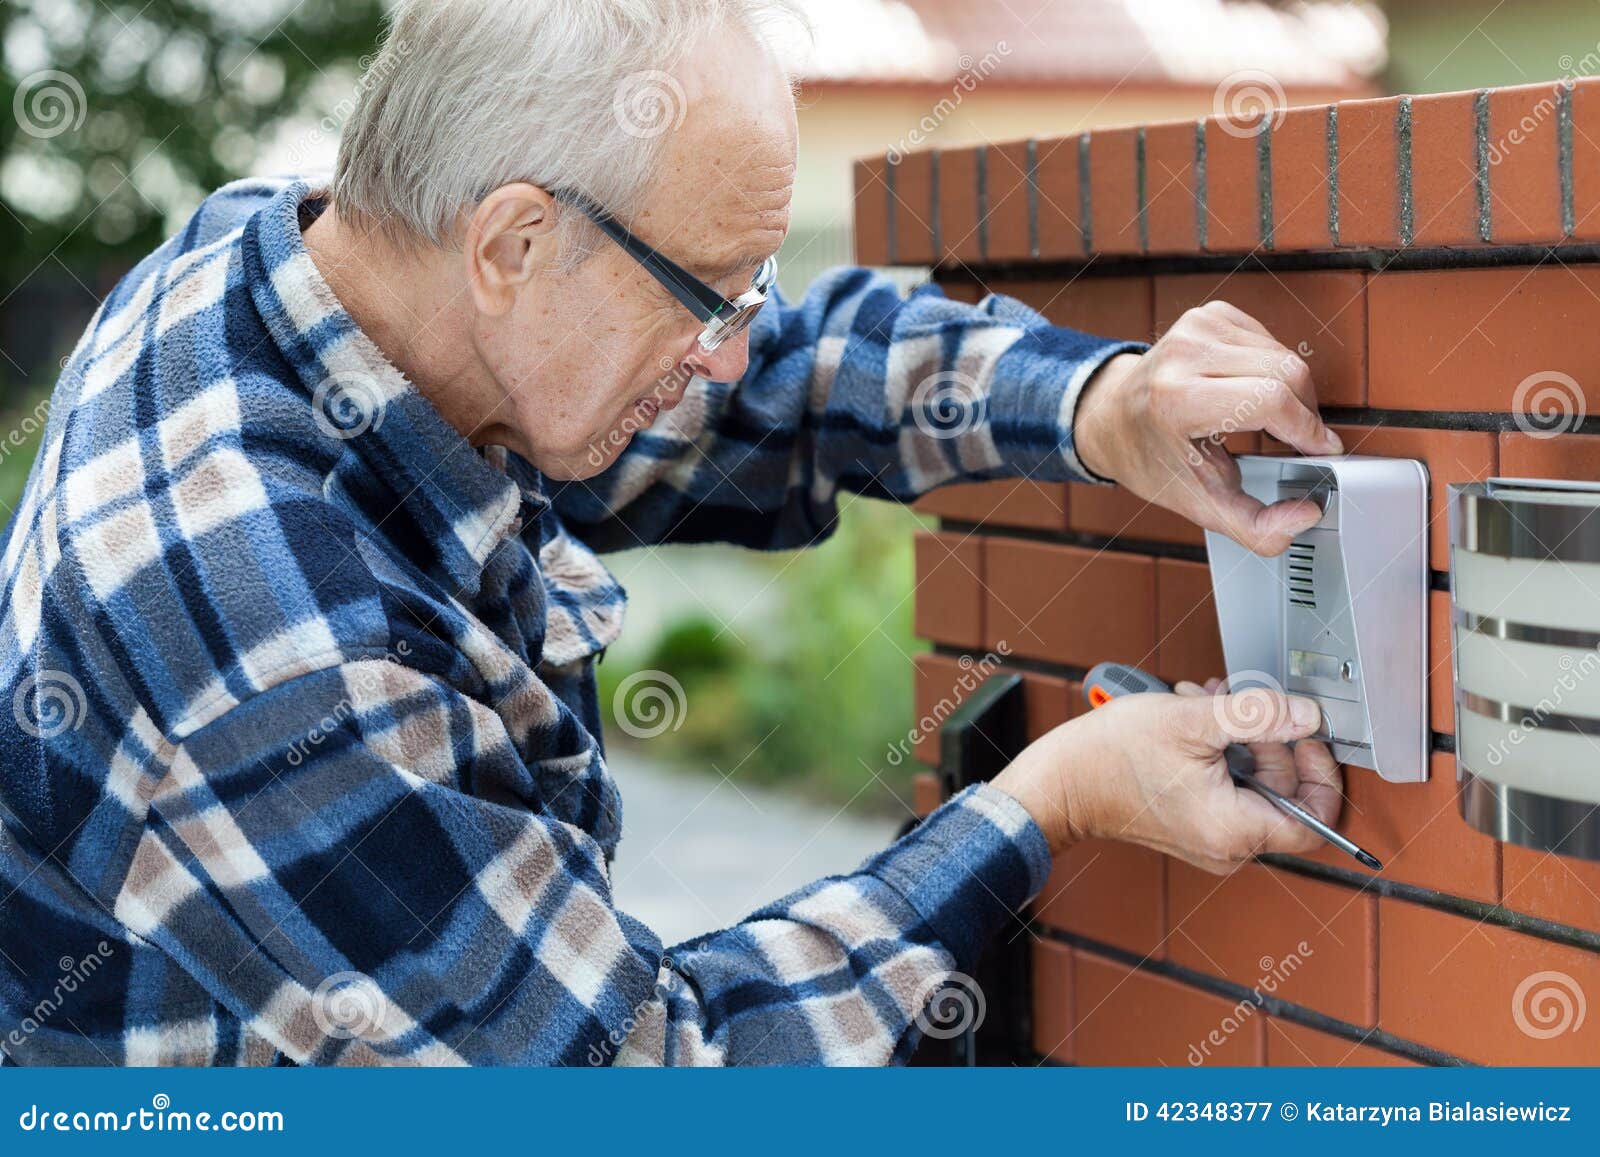 handyman fixing intercom